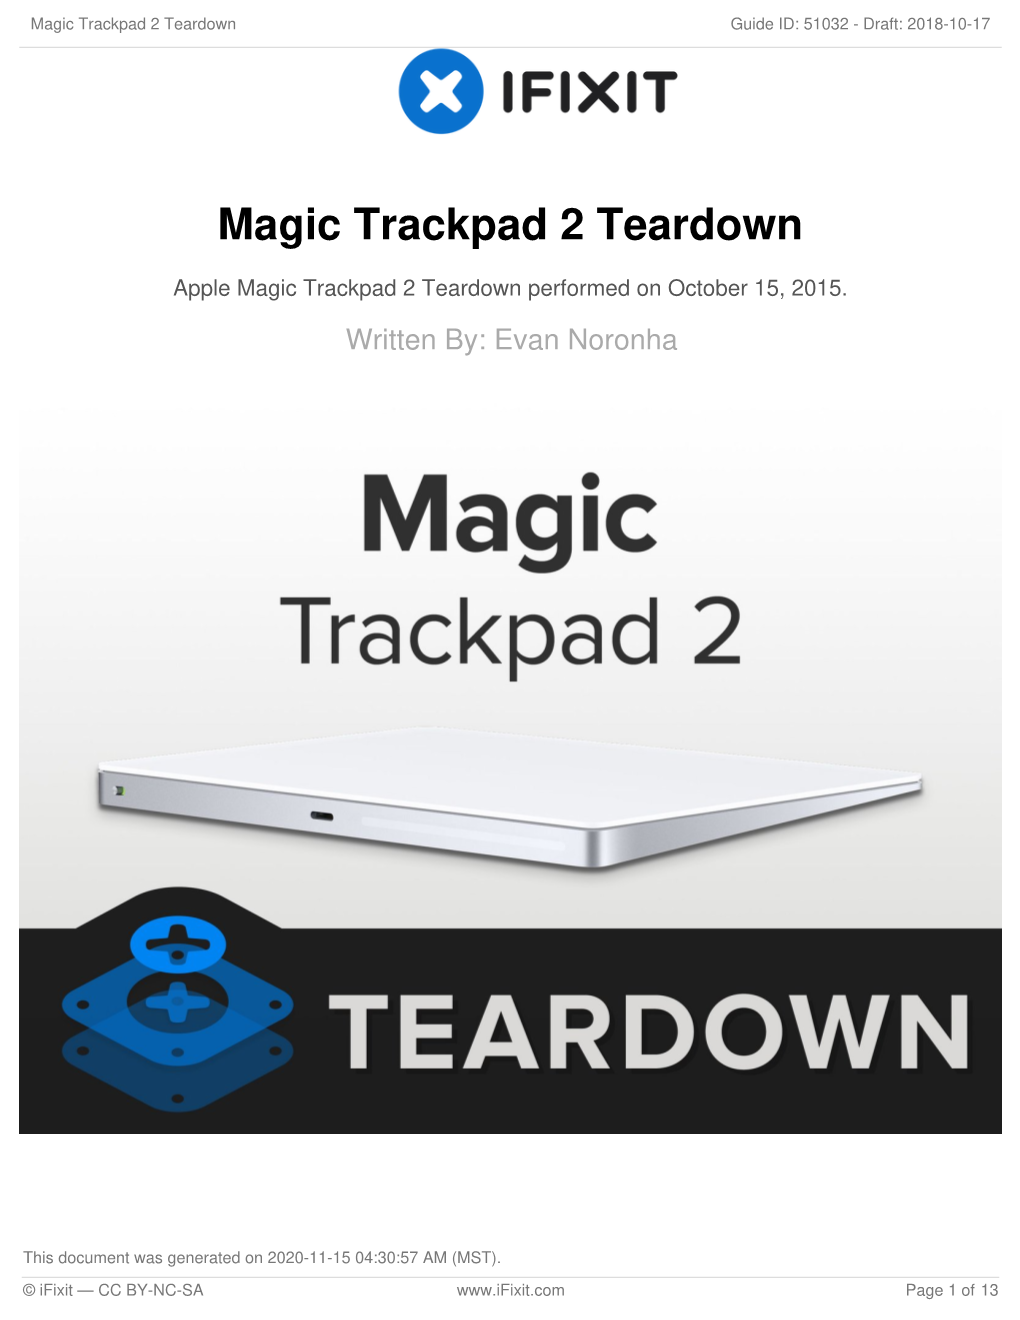 Magic Trackpad 2 Teardown Guide ID: 51032 - Draft: 2018-10-17